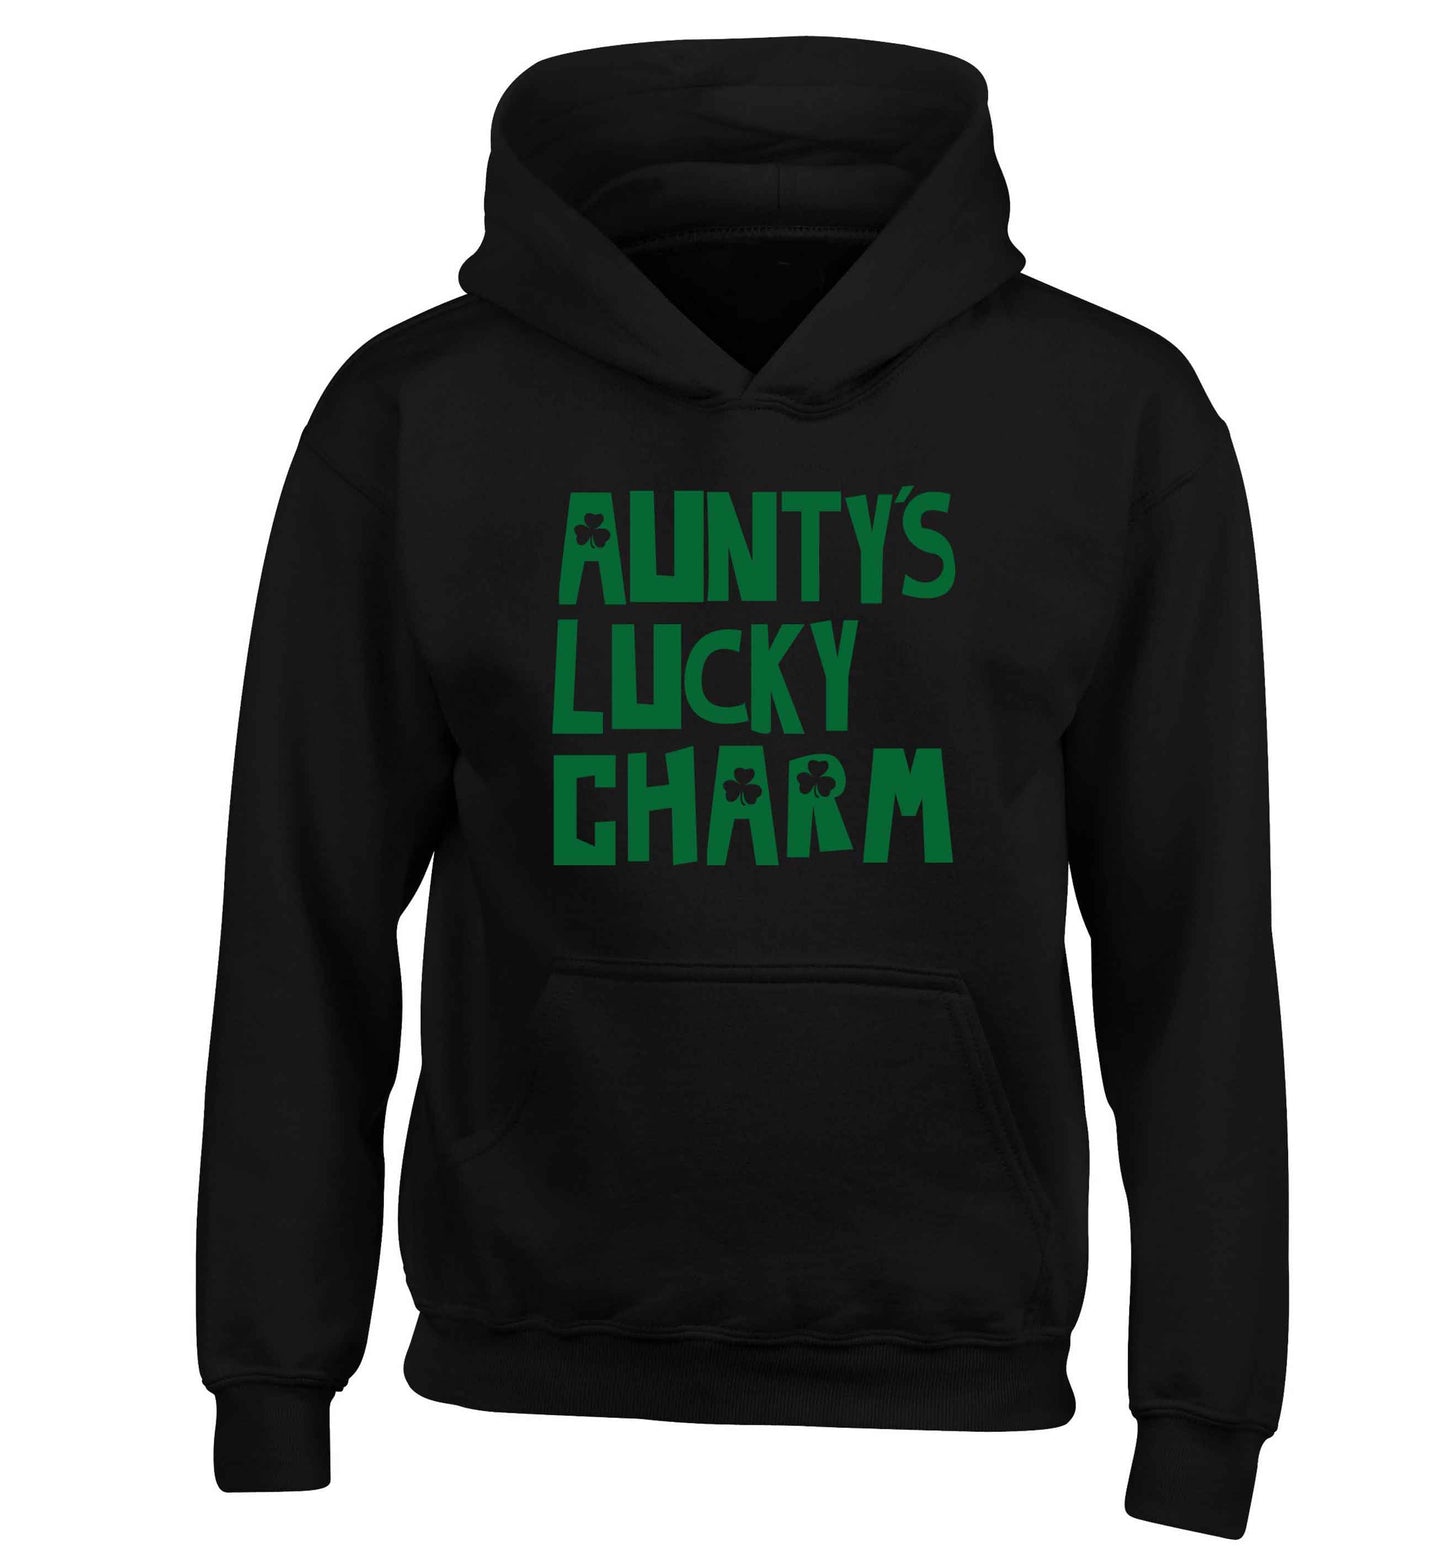 Aunty's lucky charm children's black hoodie 12-13 Years